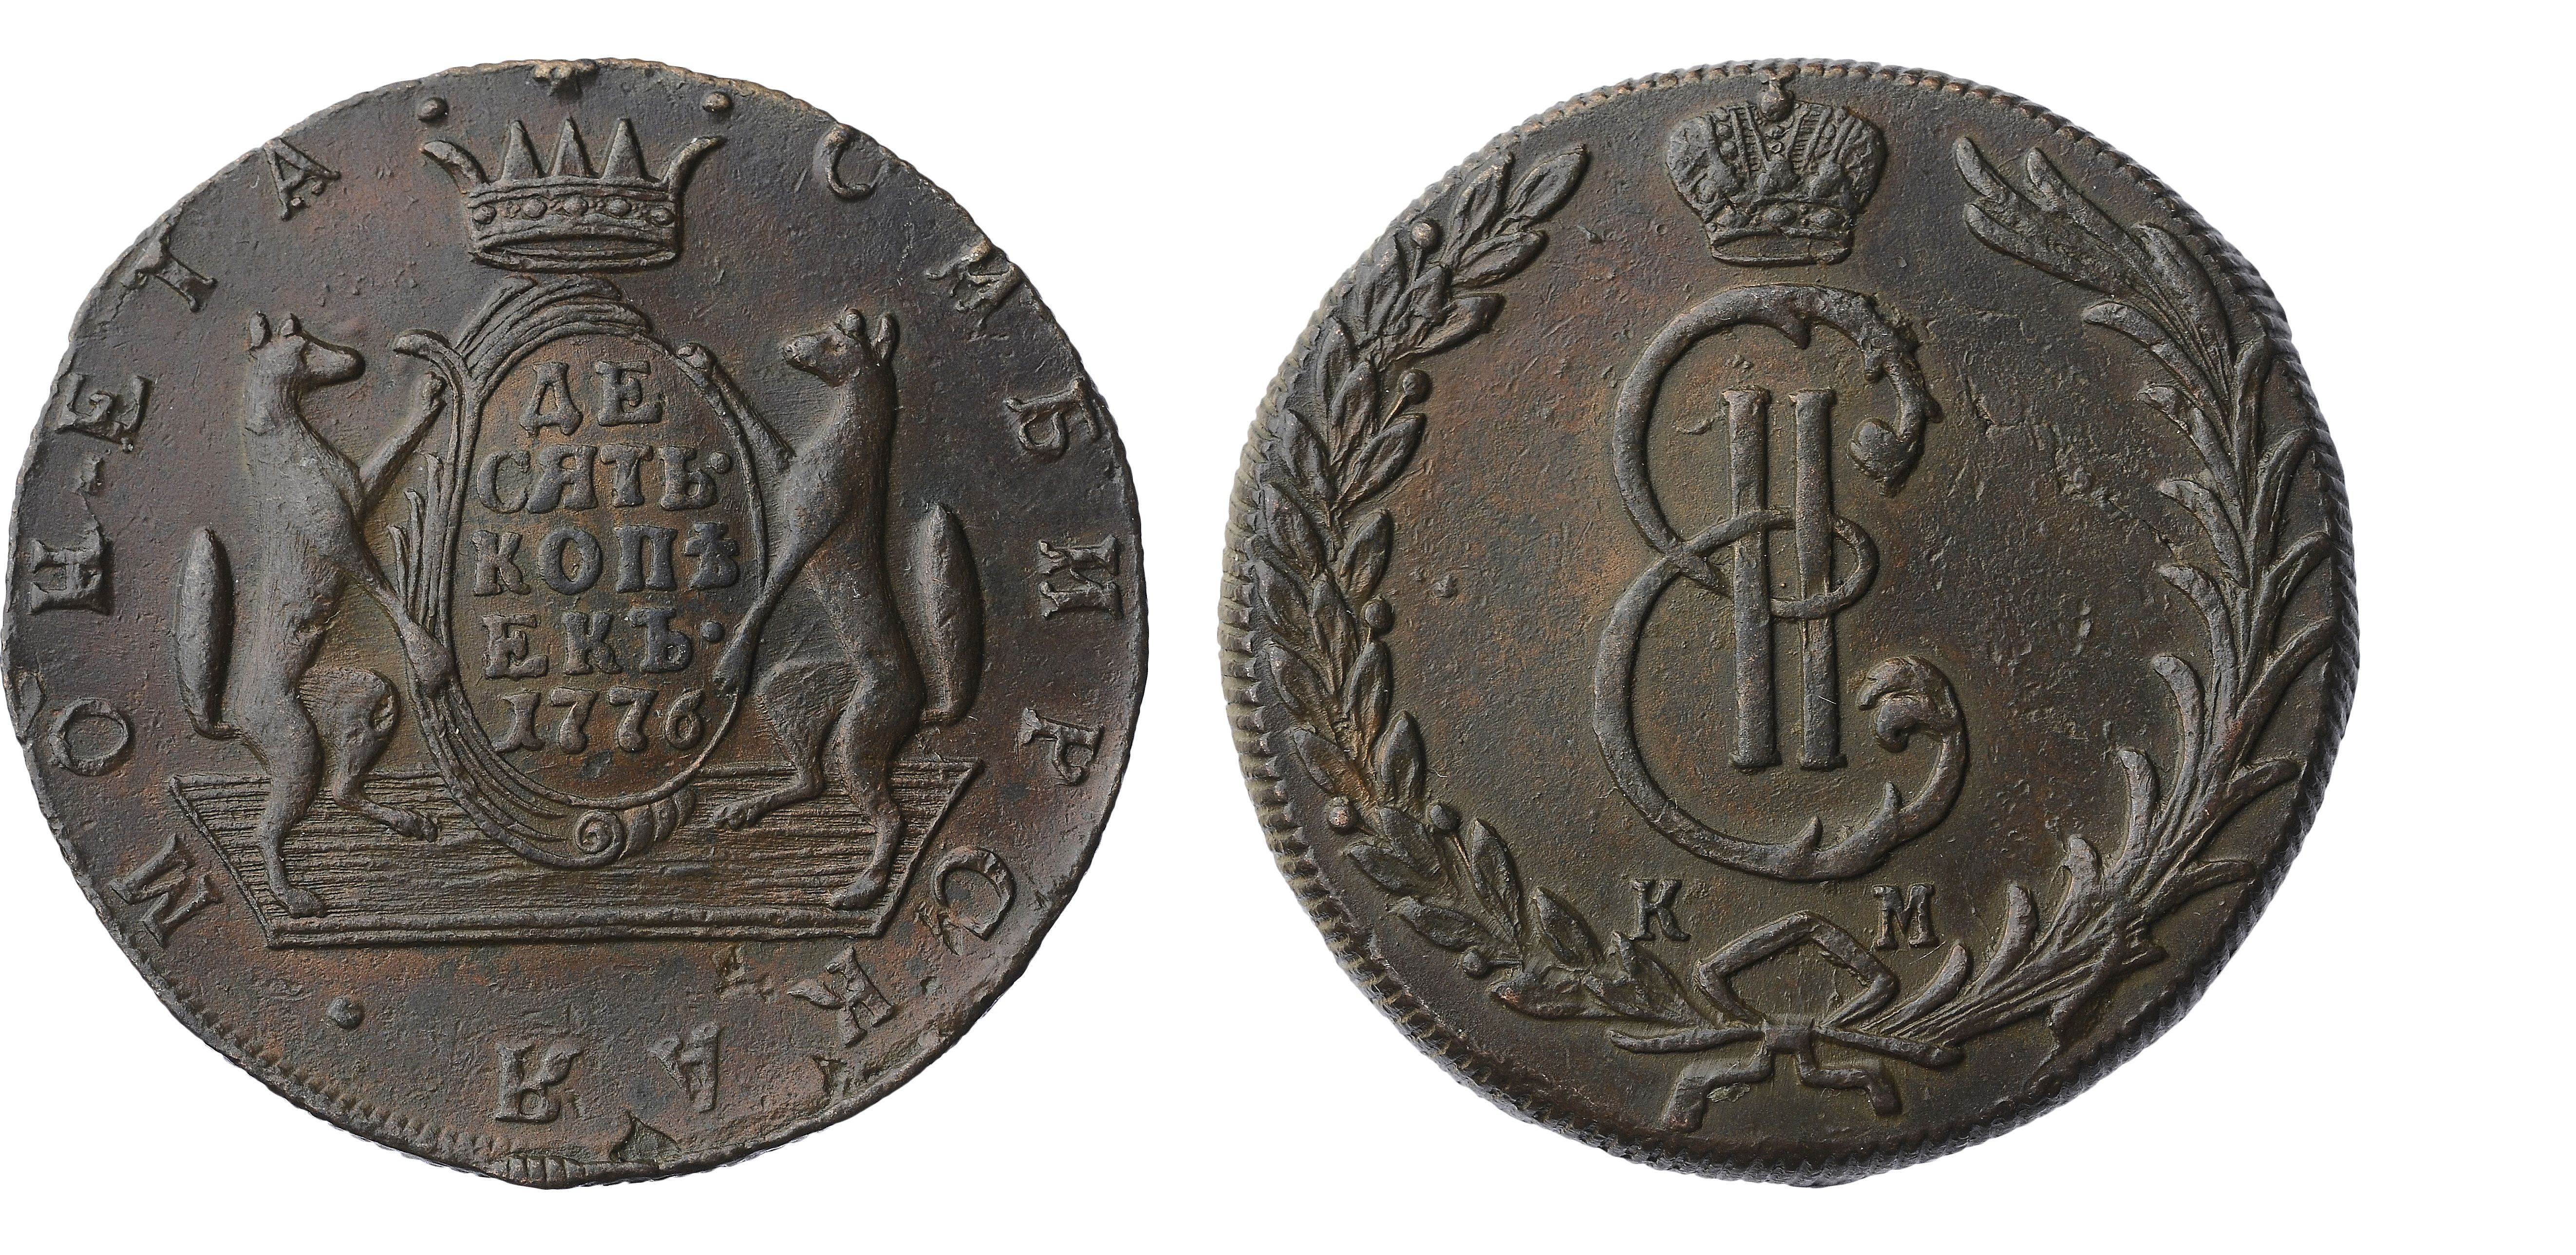 136. 10 Копеек 1776 г. КМ. “Сибирская монета”.